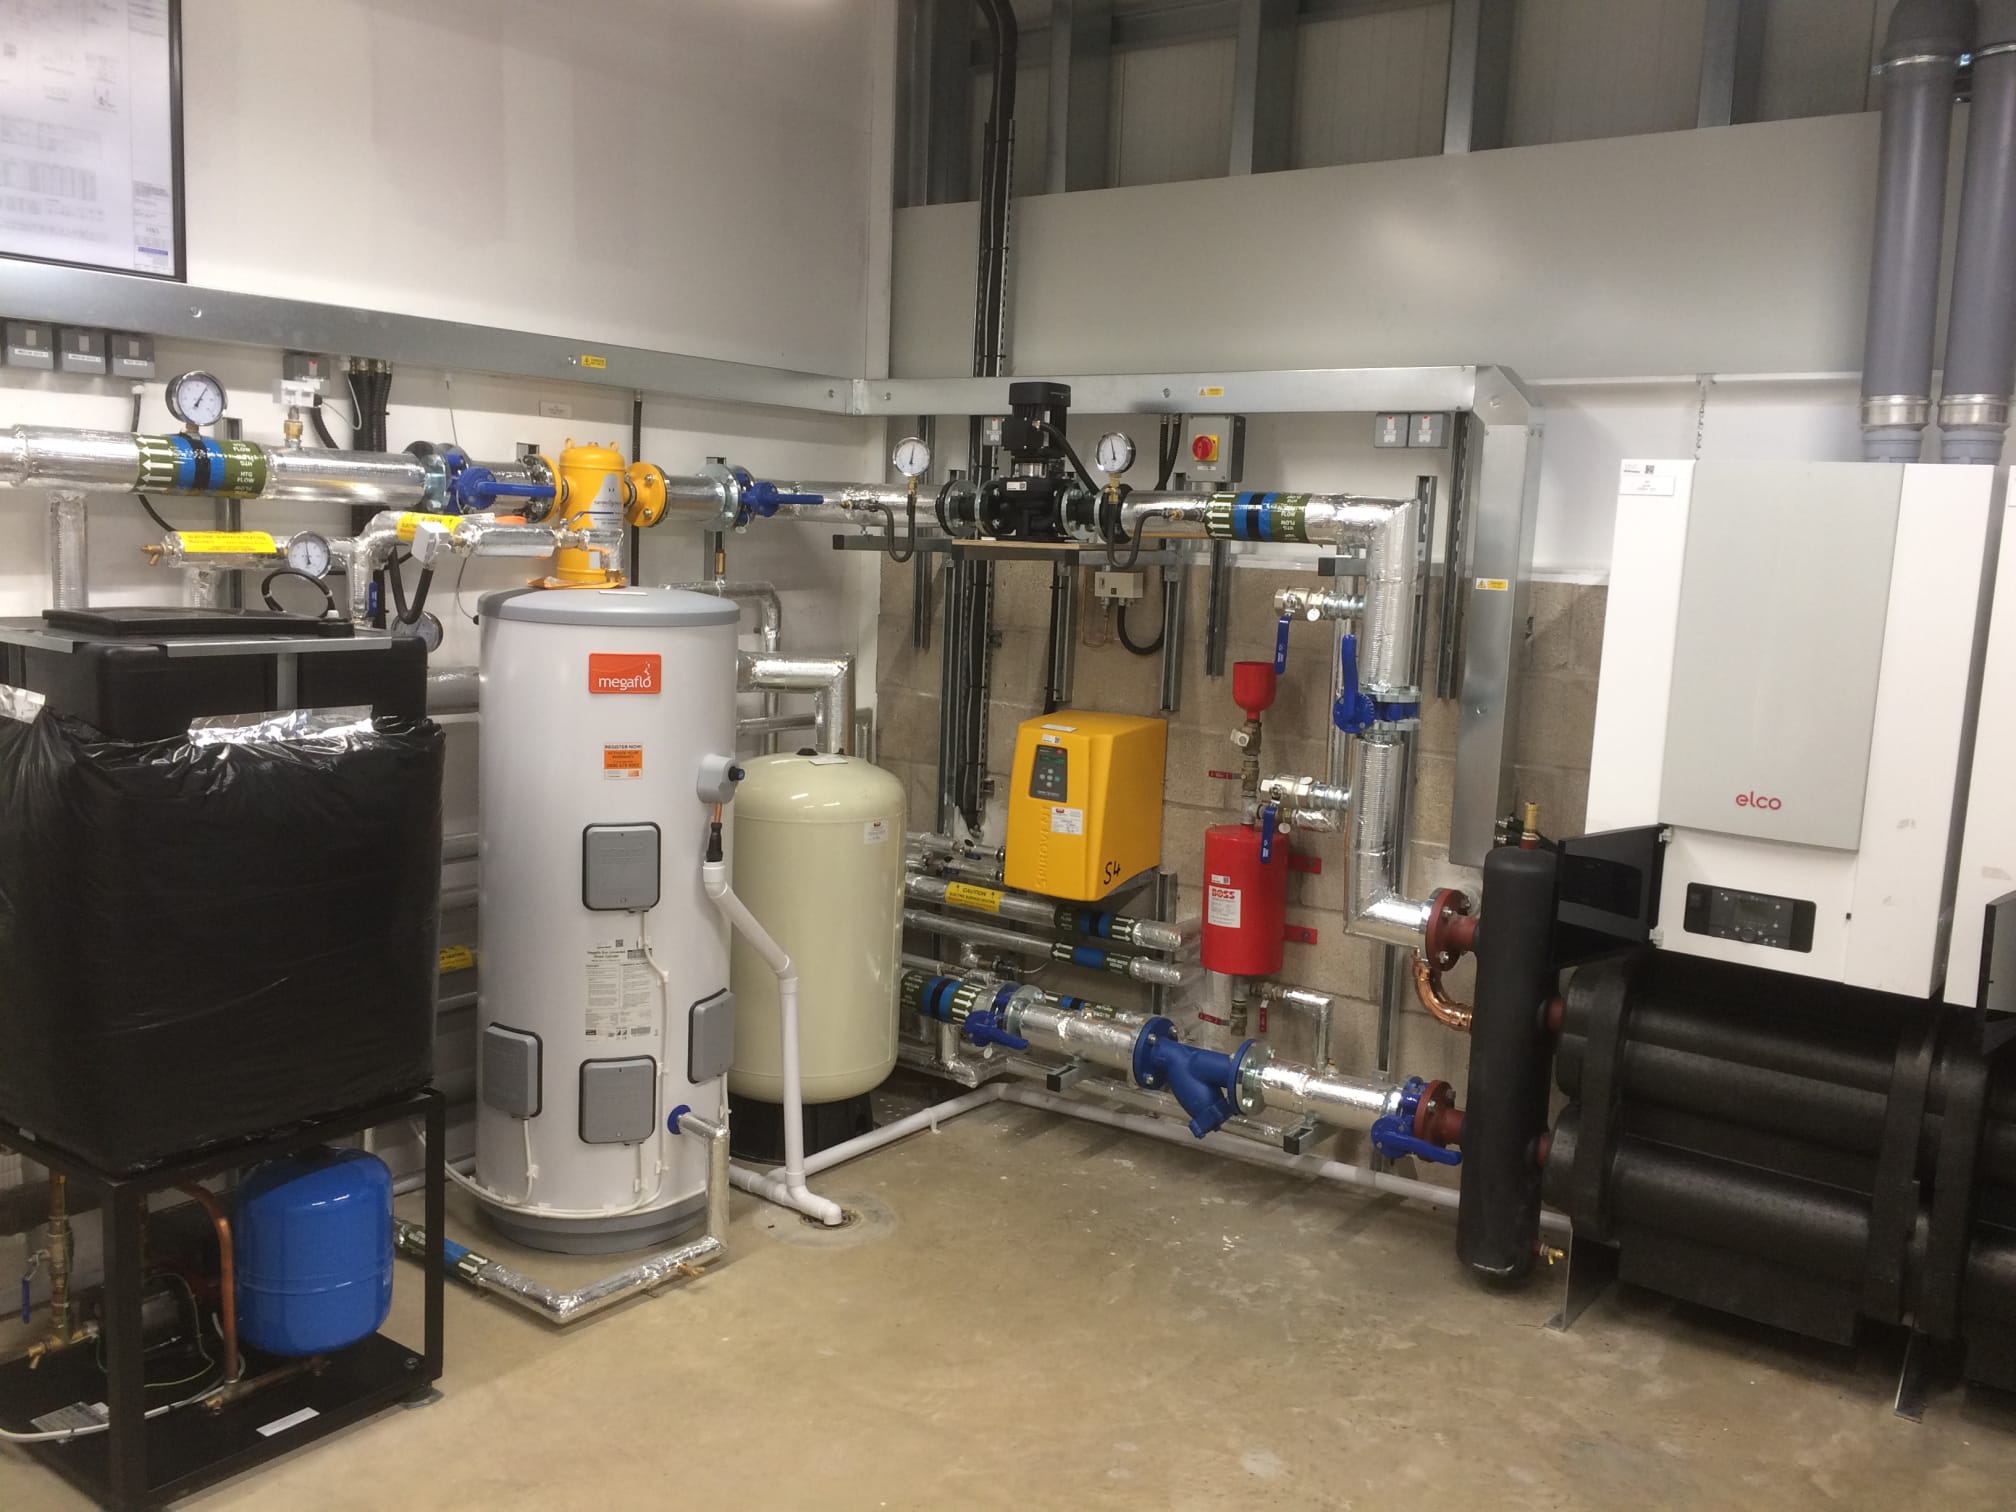 Smart Gas Heating & Plumbing Services Kidderminster 07891 187627